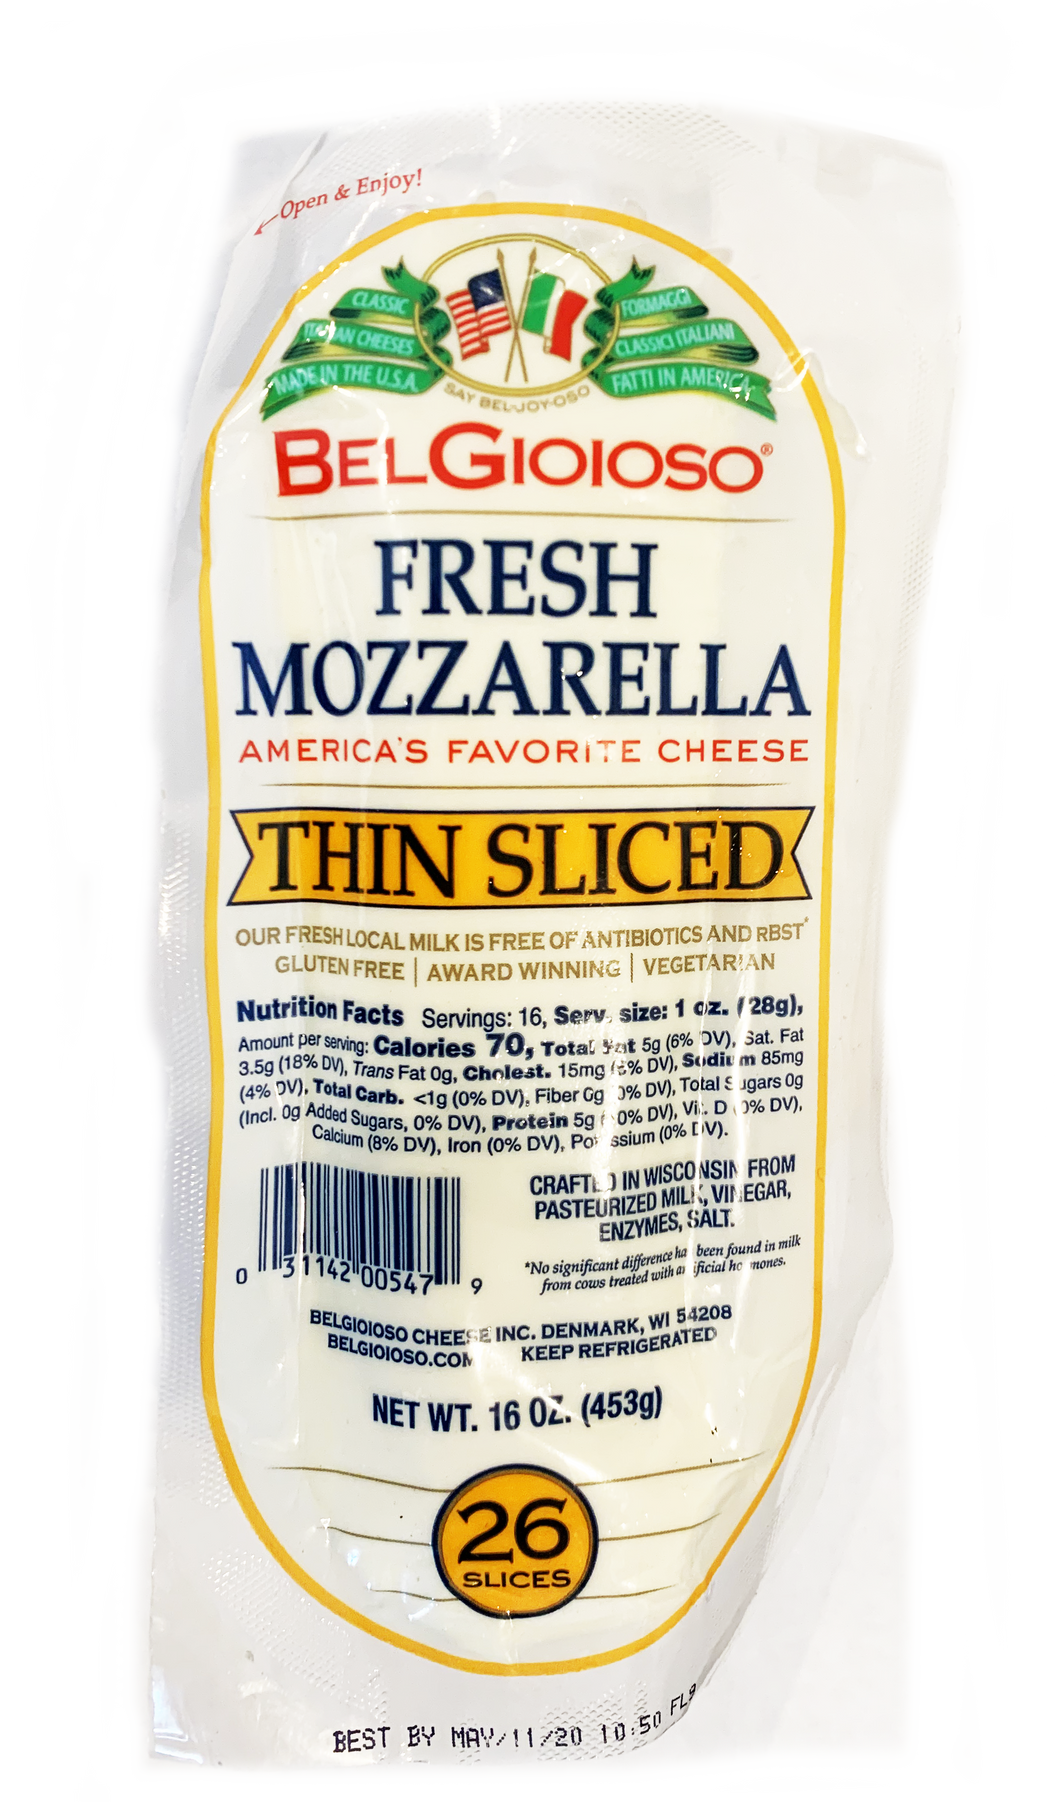 Bel Gioioso Mozzarella Thin Sliced 1lb